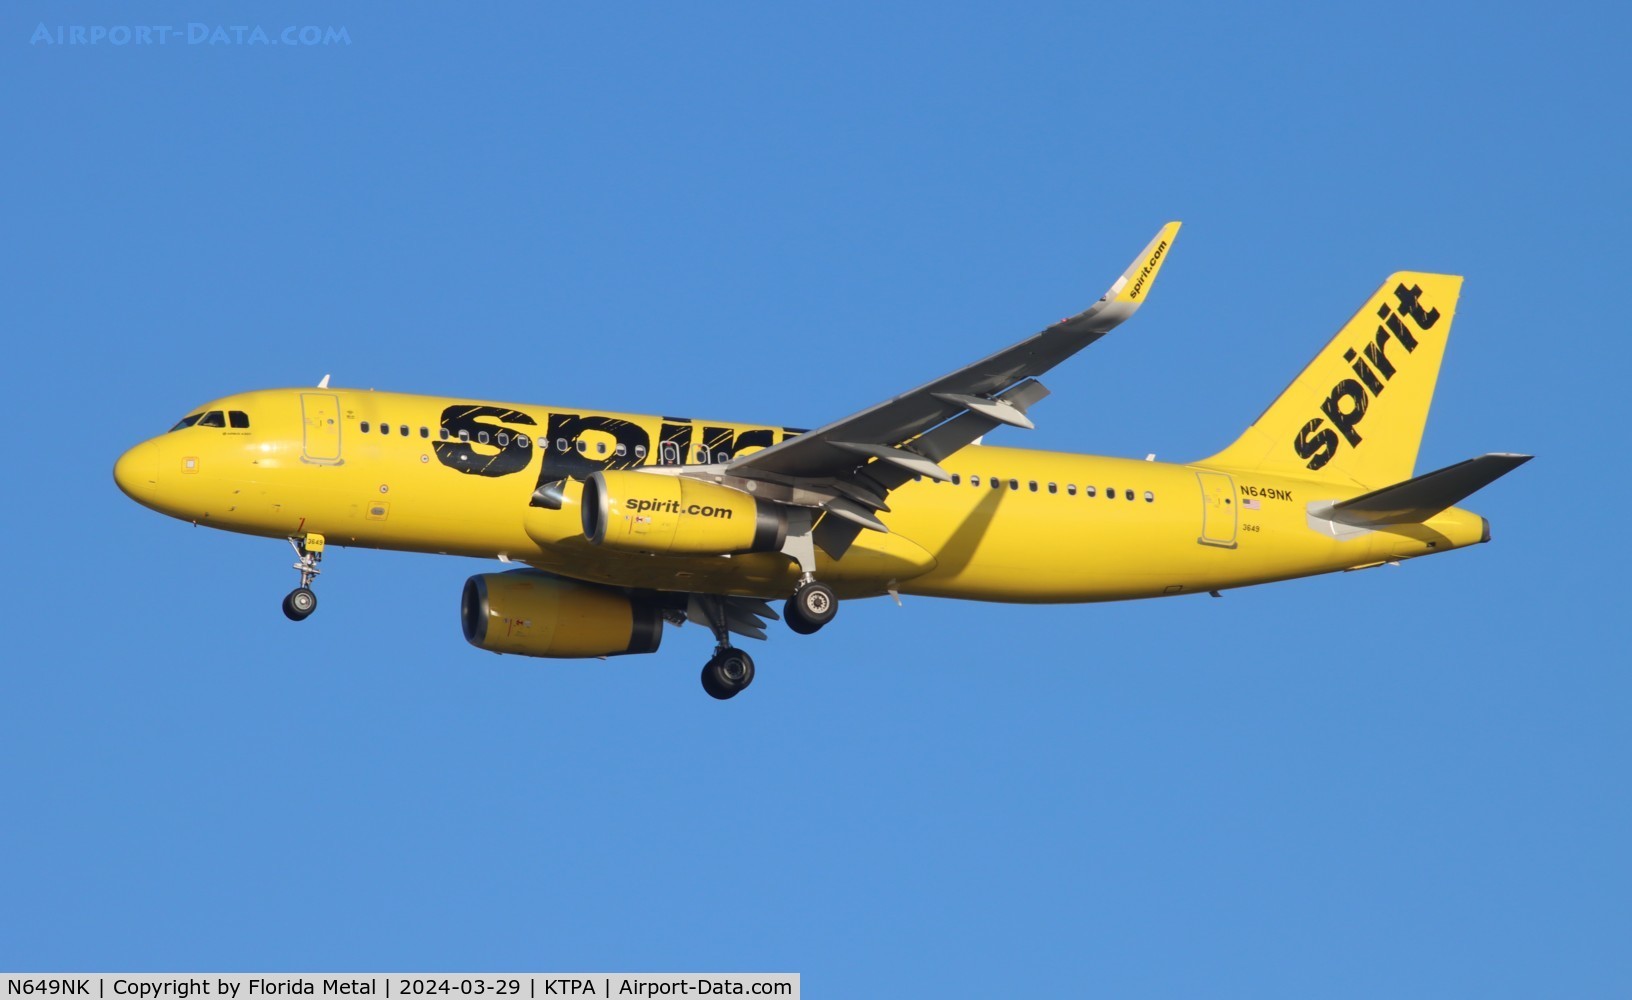 N649NK, 2017 Airbus A320-232 C/N 7679, NKS A320 yellow zx FLL-TPA